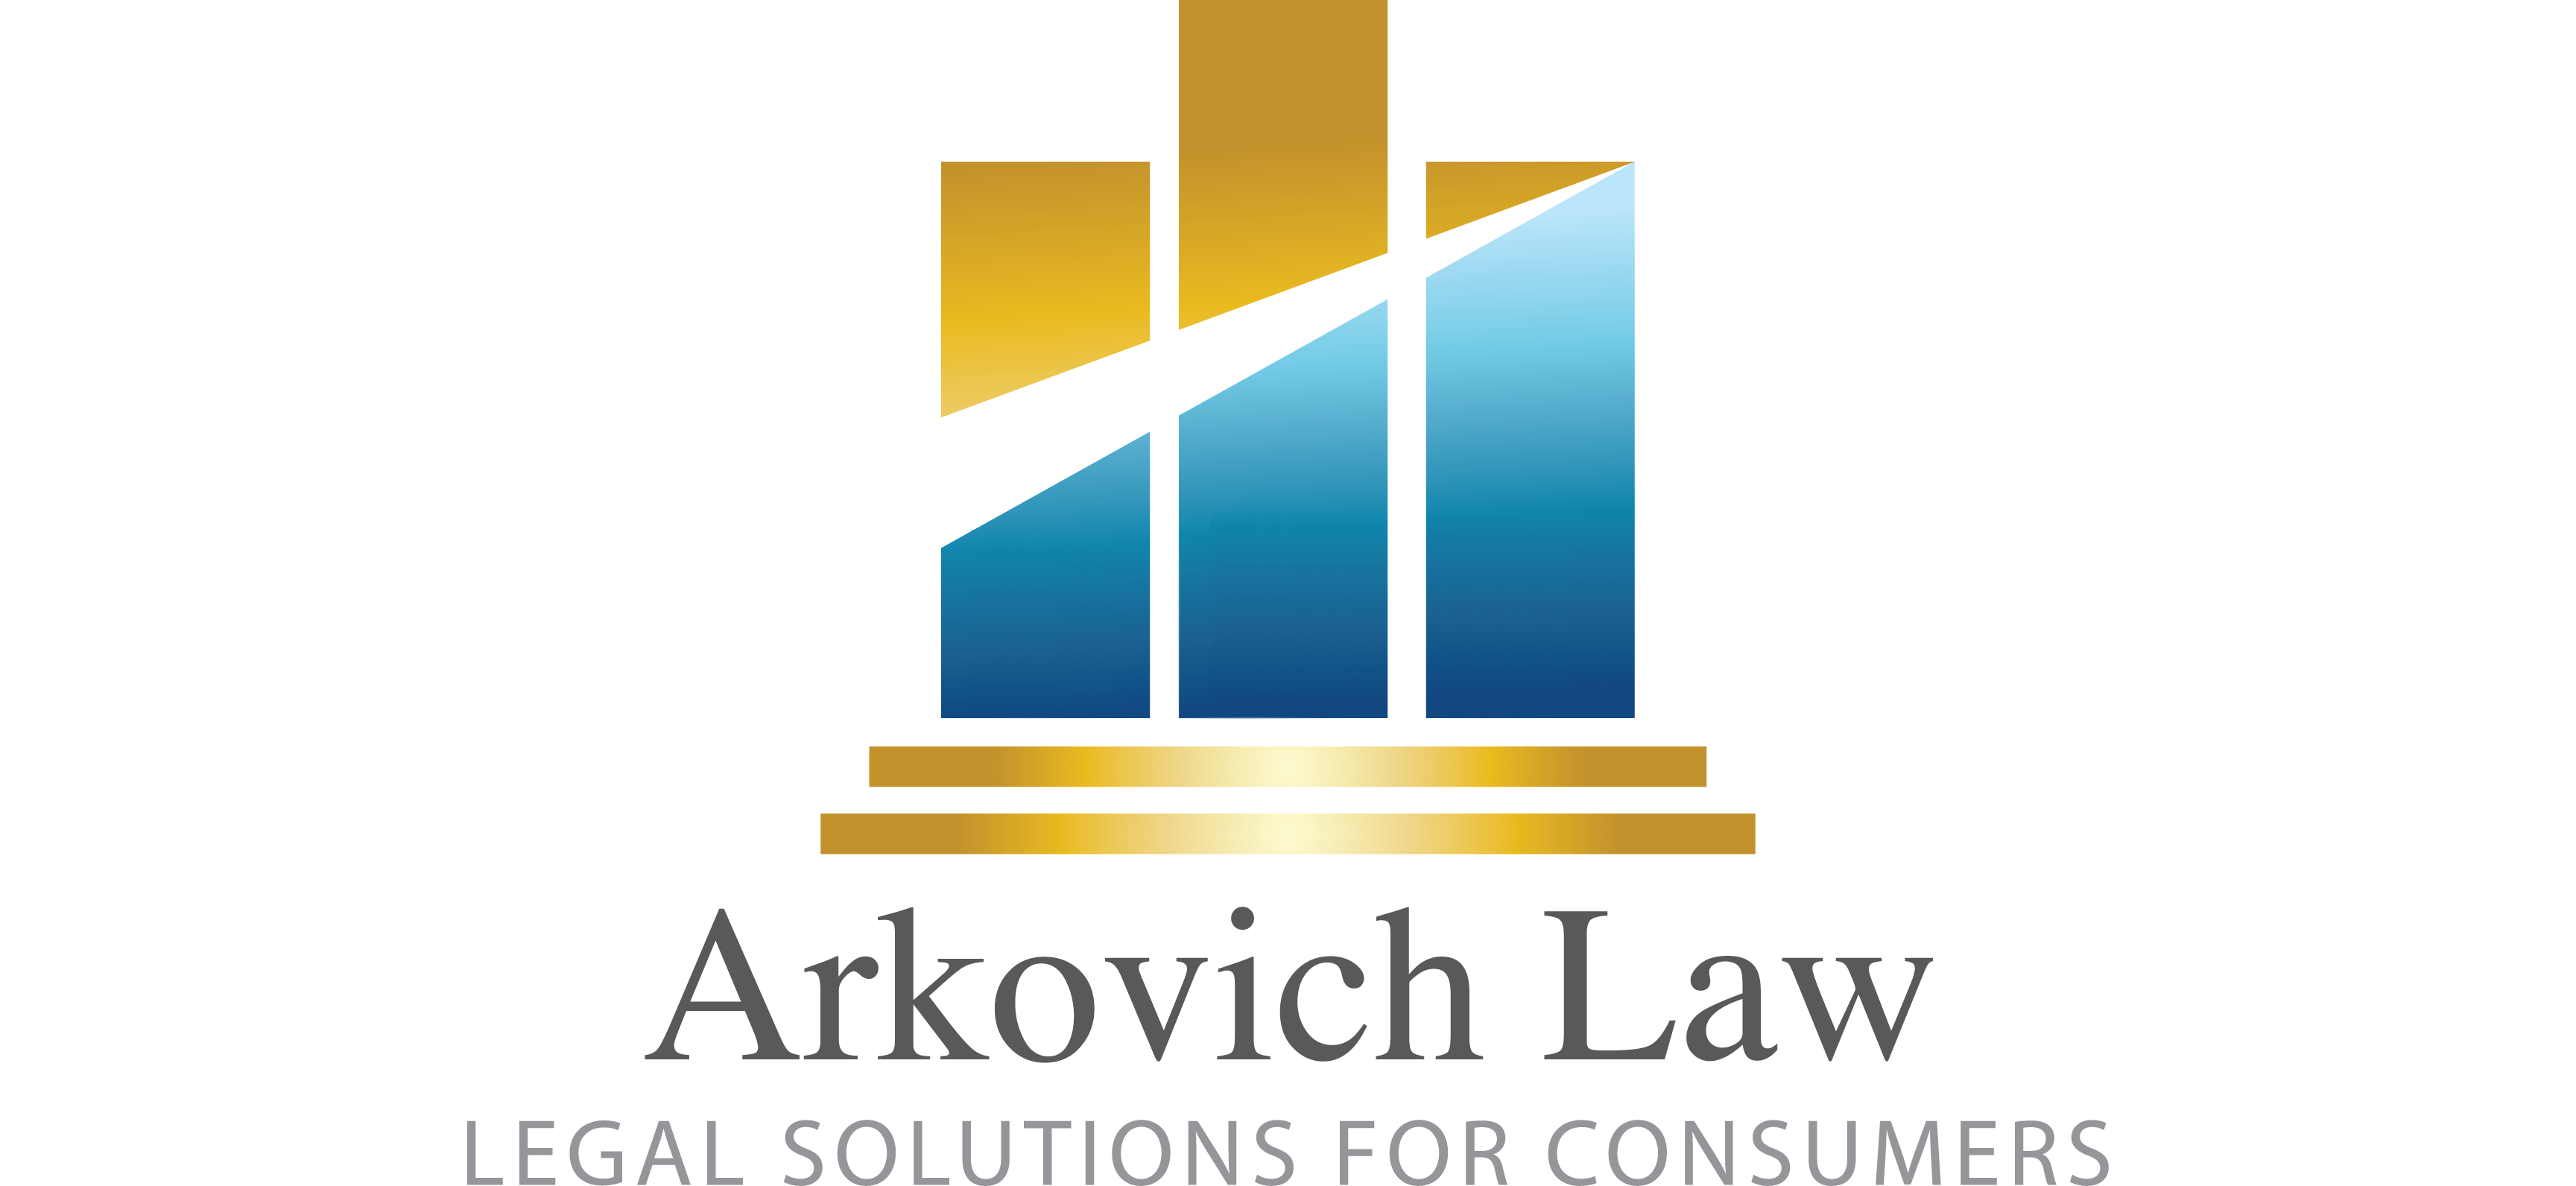 arkovich_law-narrow